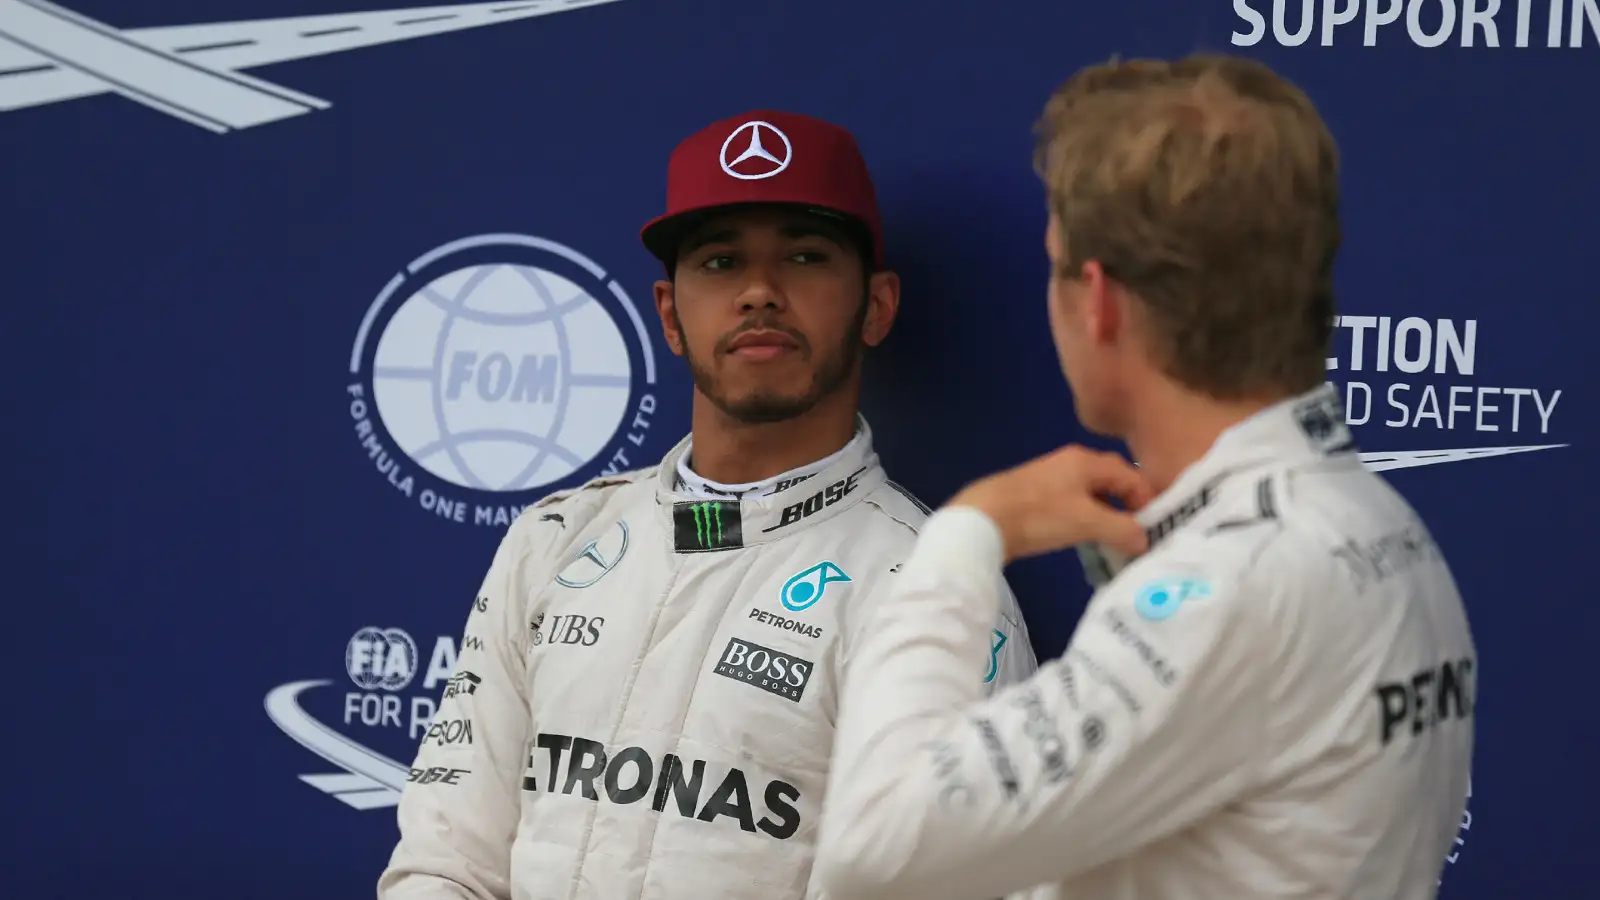 Lewis Hamilton and Nico Rosberg at the 2016 United States Grand Prix.